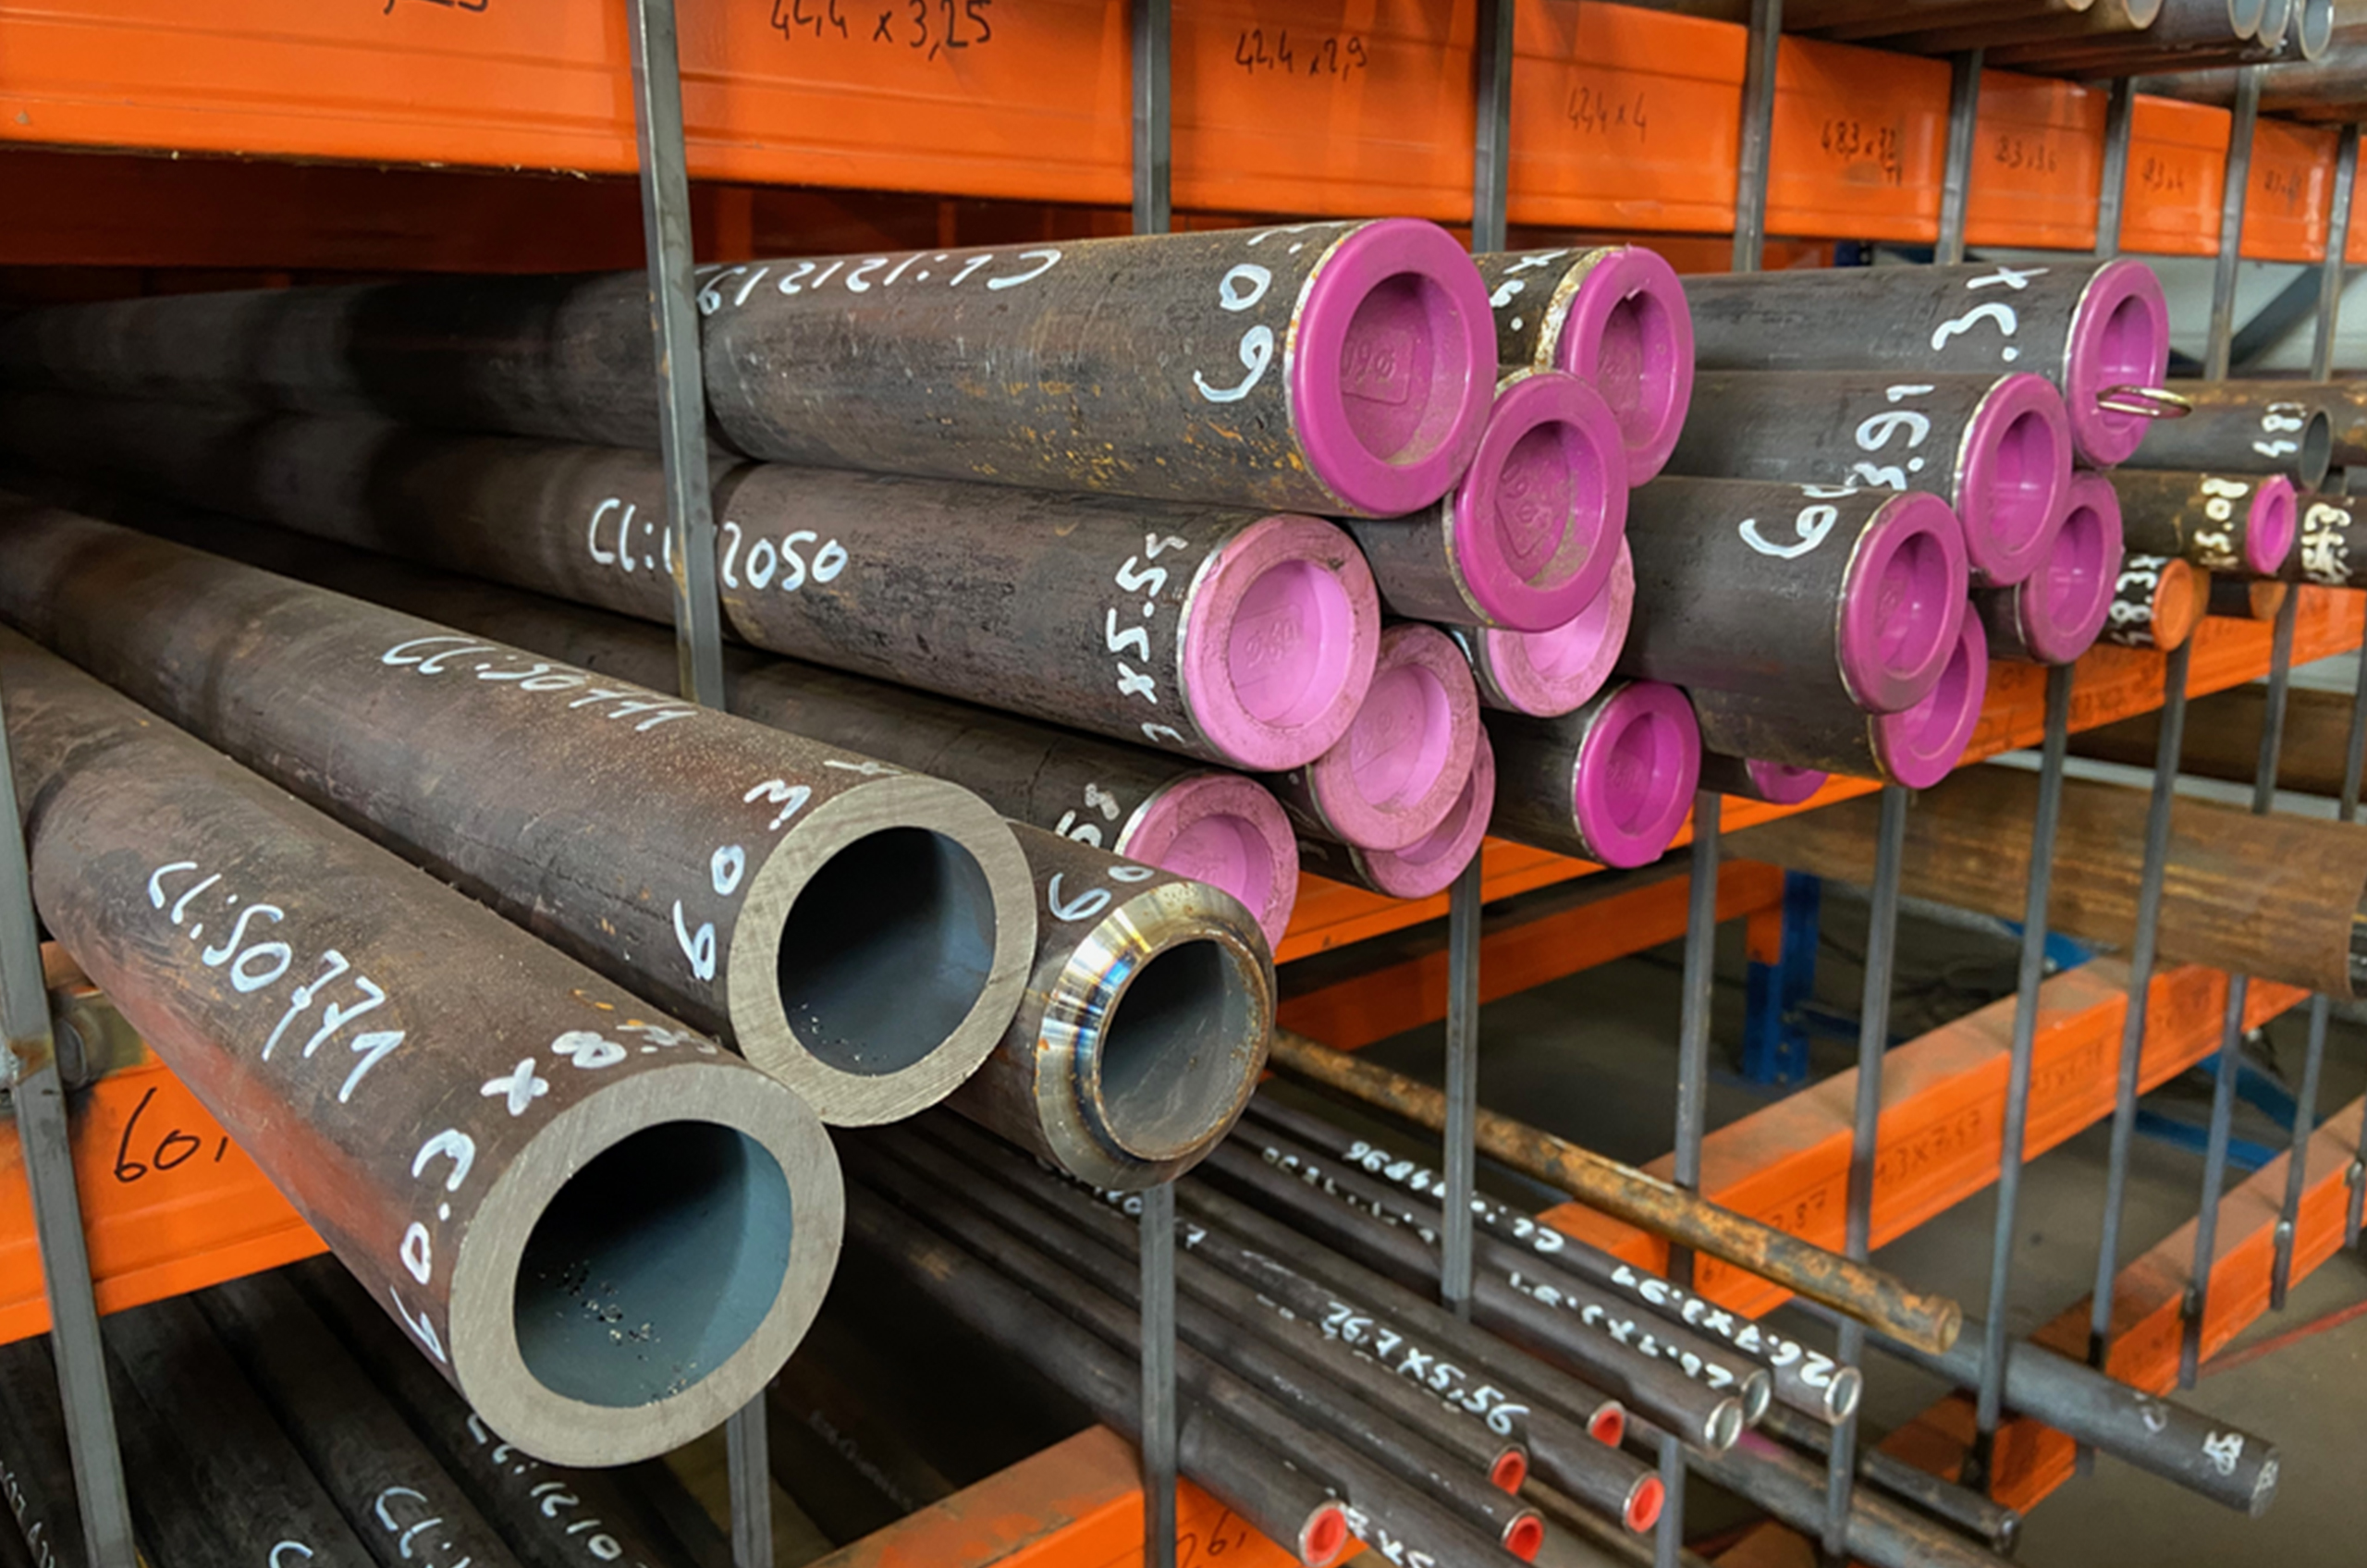 Tube rond structural et ornemental en acier inoxydable - CFF Stainless  Steels Inc.